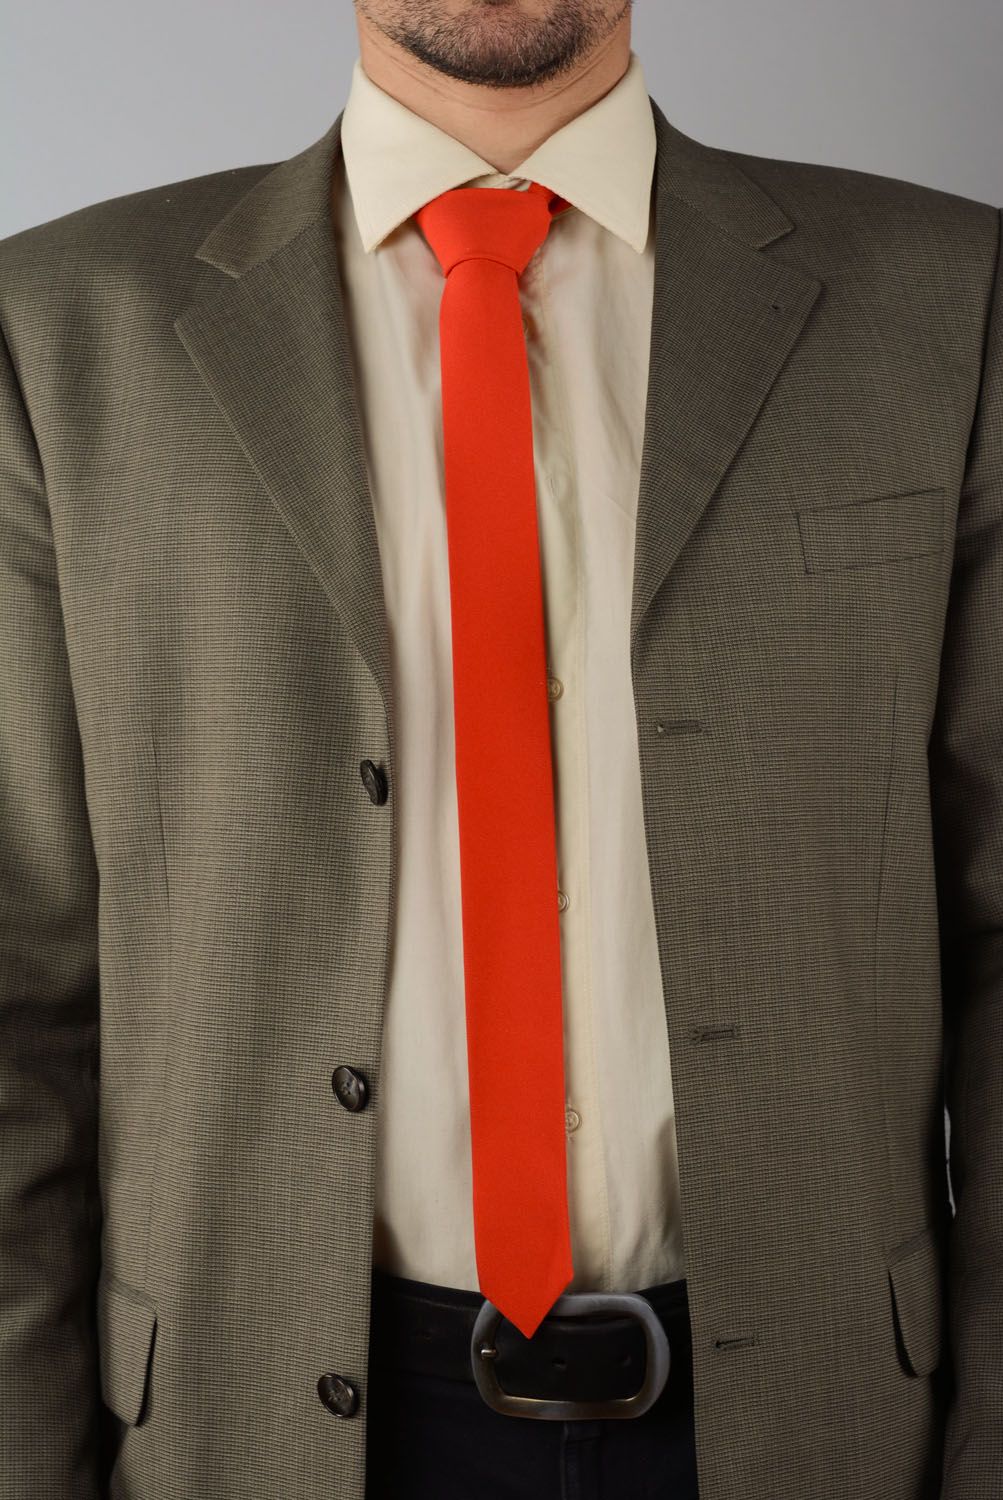 Corbata fina roja foto 1